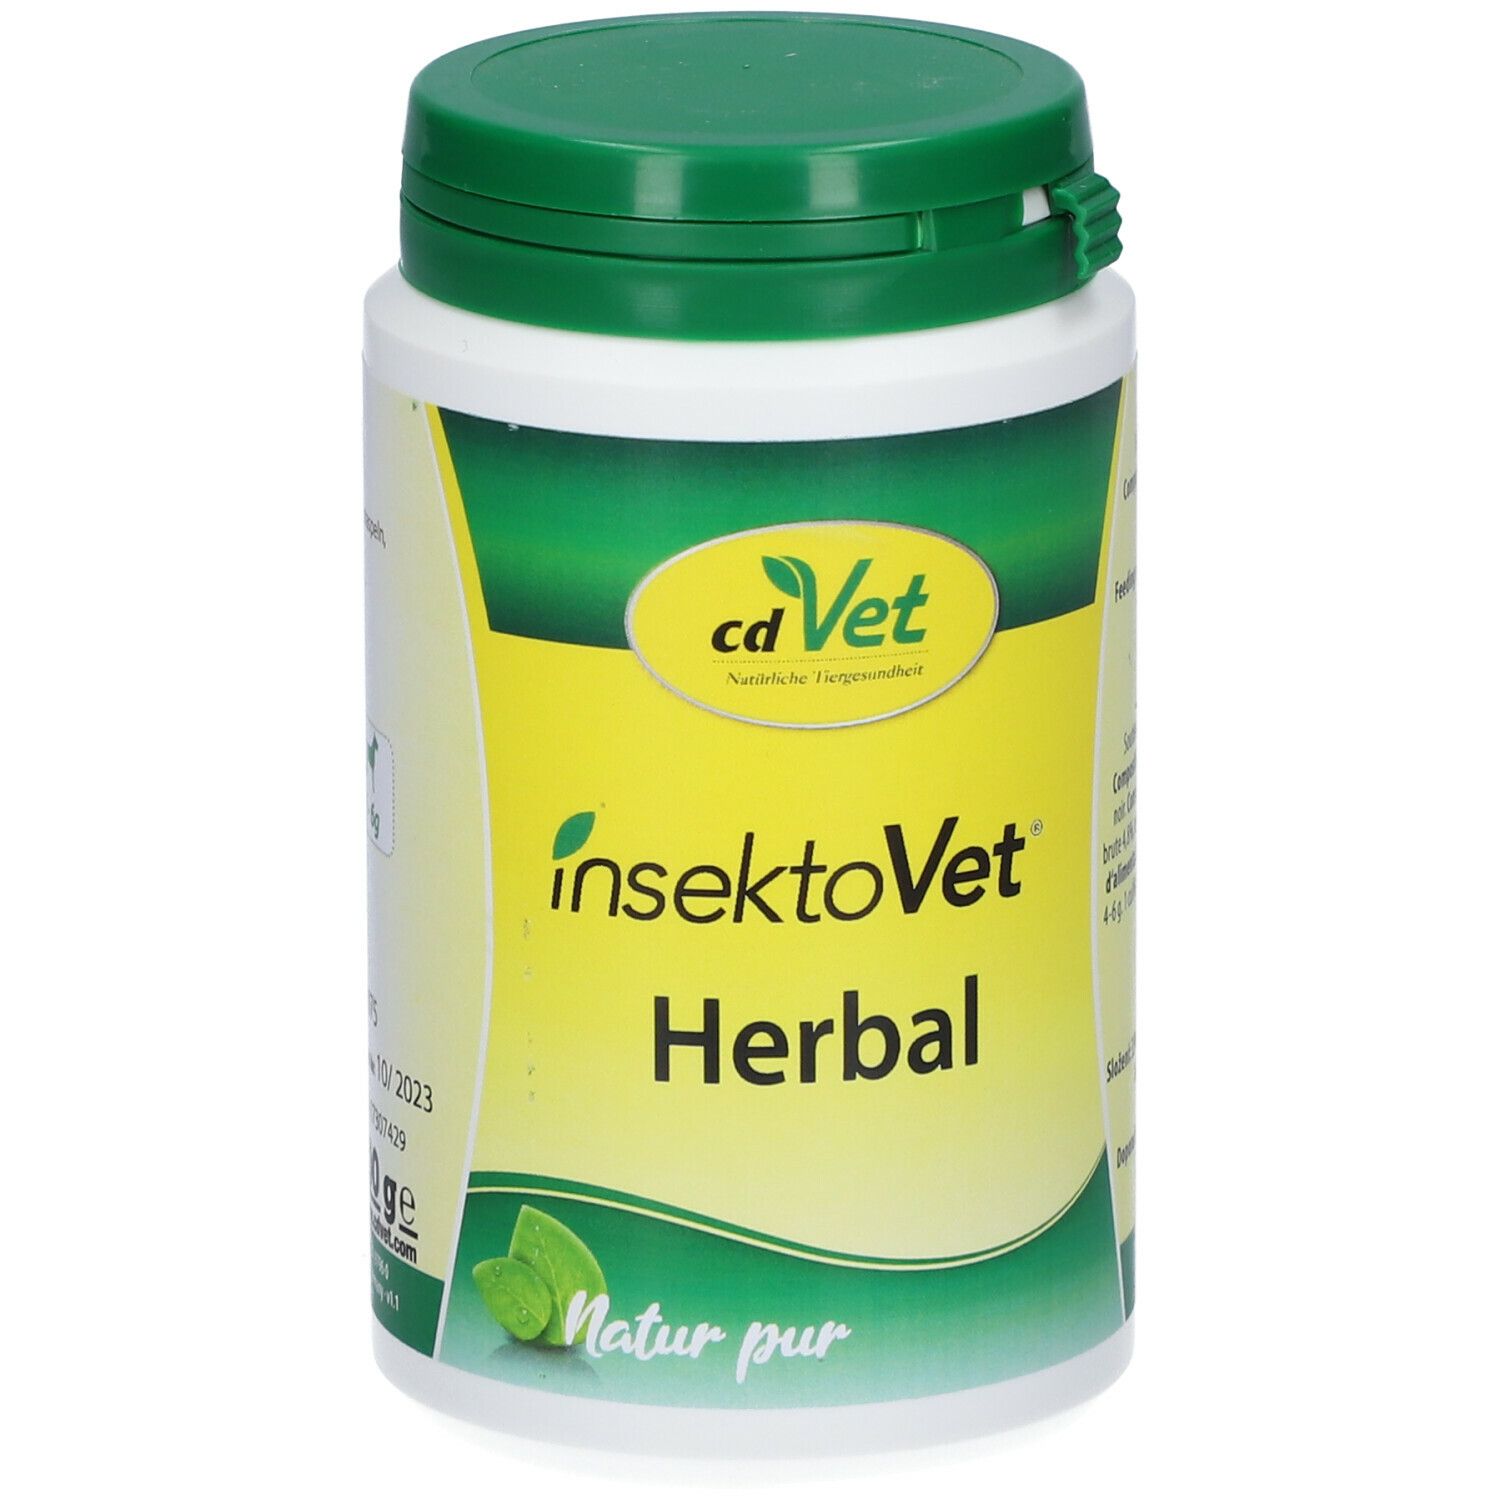 cdVet insektoVet® Herbal